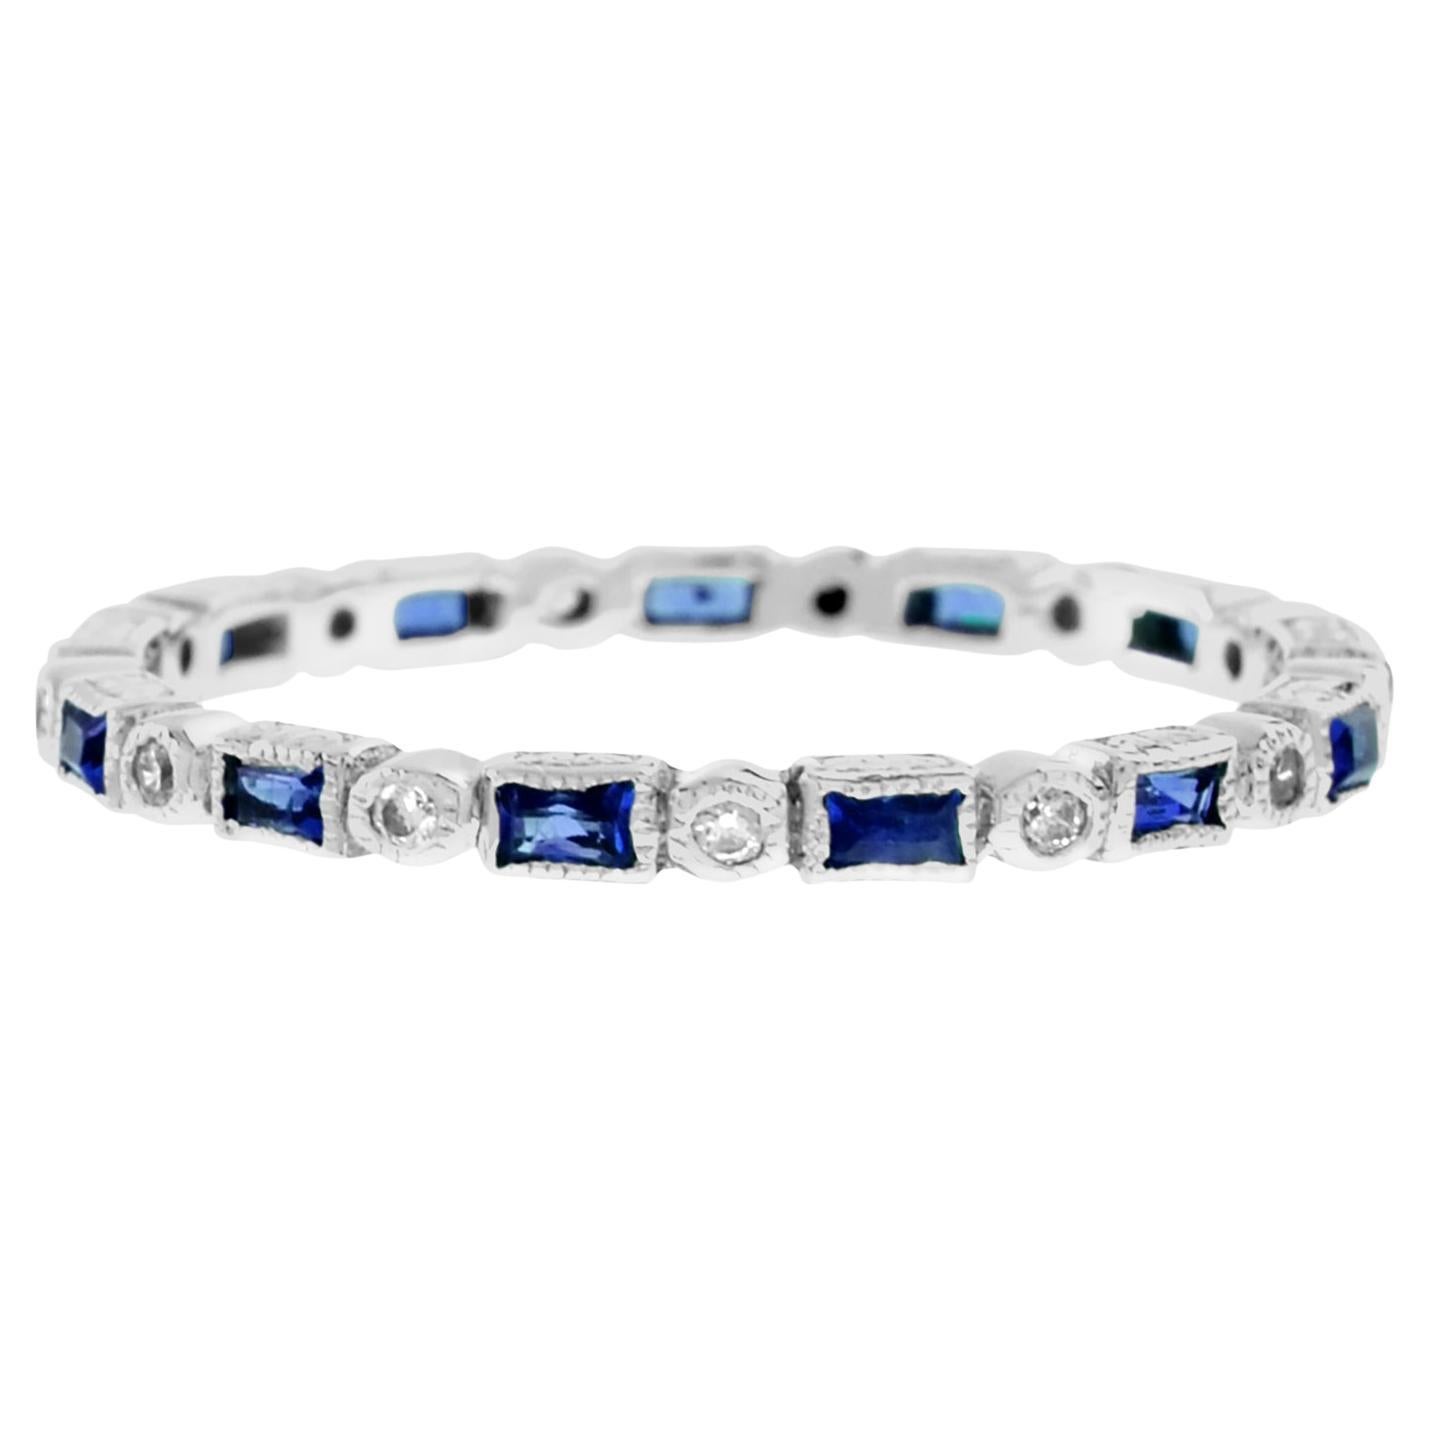 Alternate Sapphire and Diamond Art Deco Style Eternity Ring in 14K White Gold